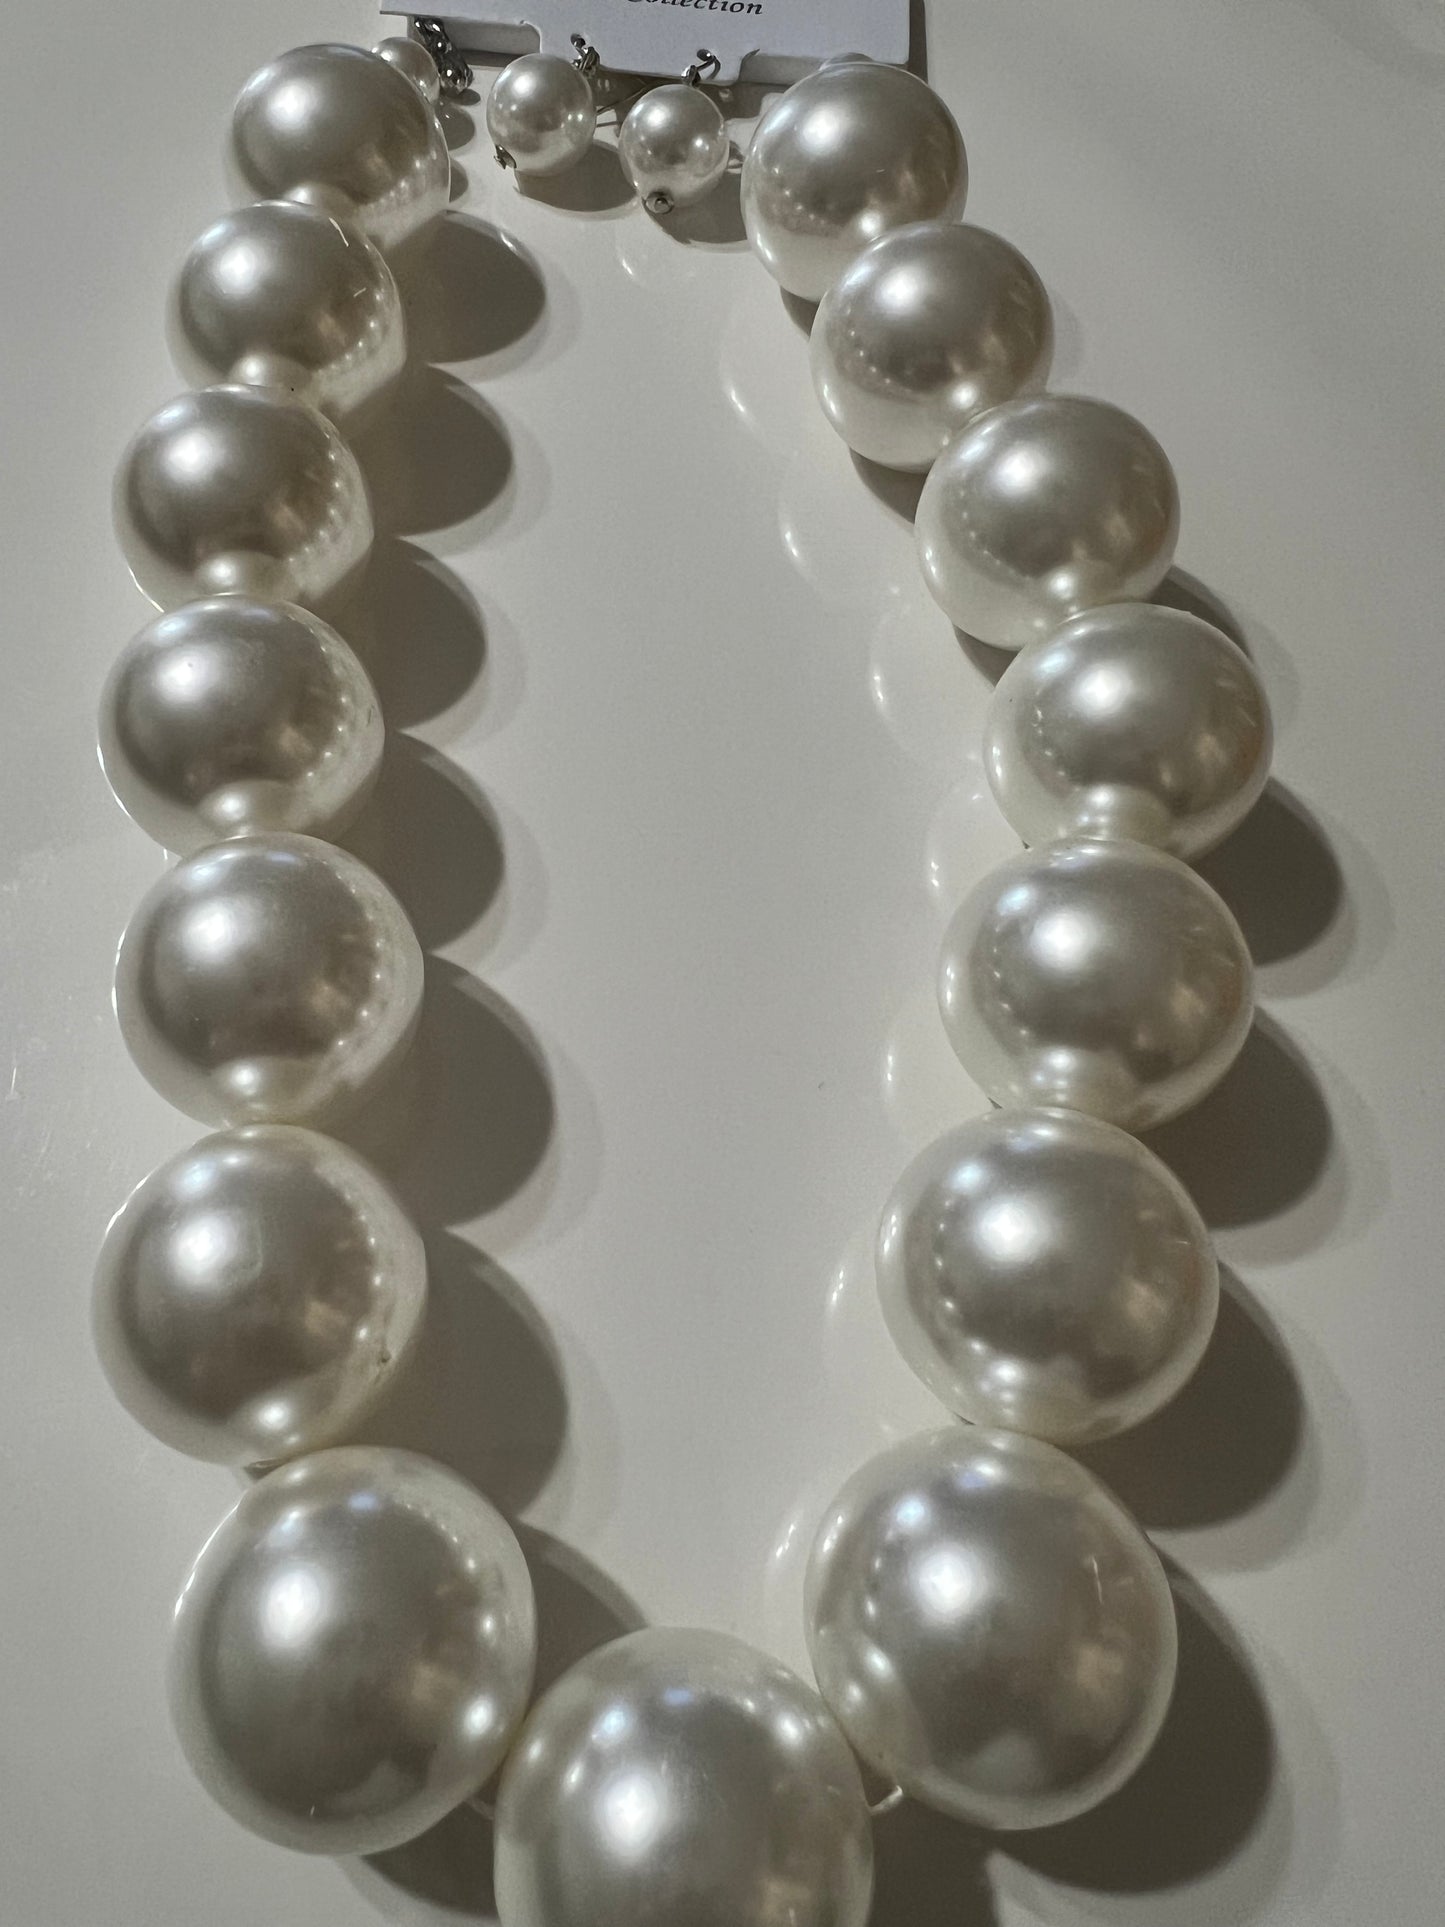 “Wanda” White Jumbo Pearl Necklace